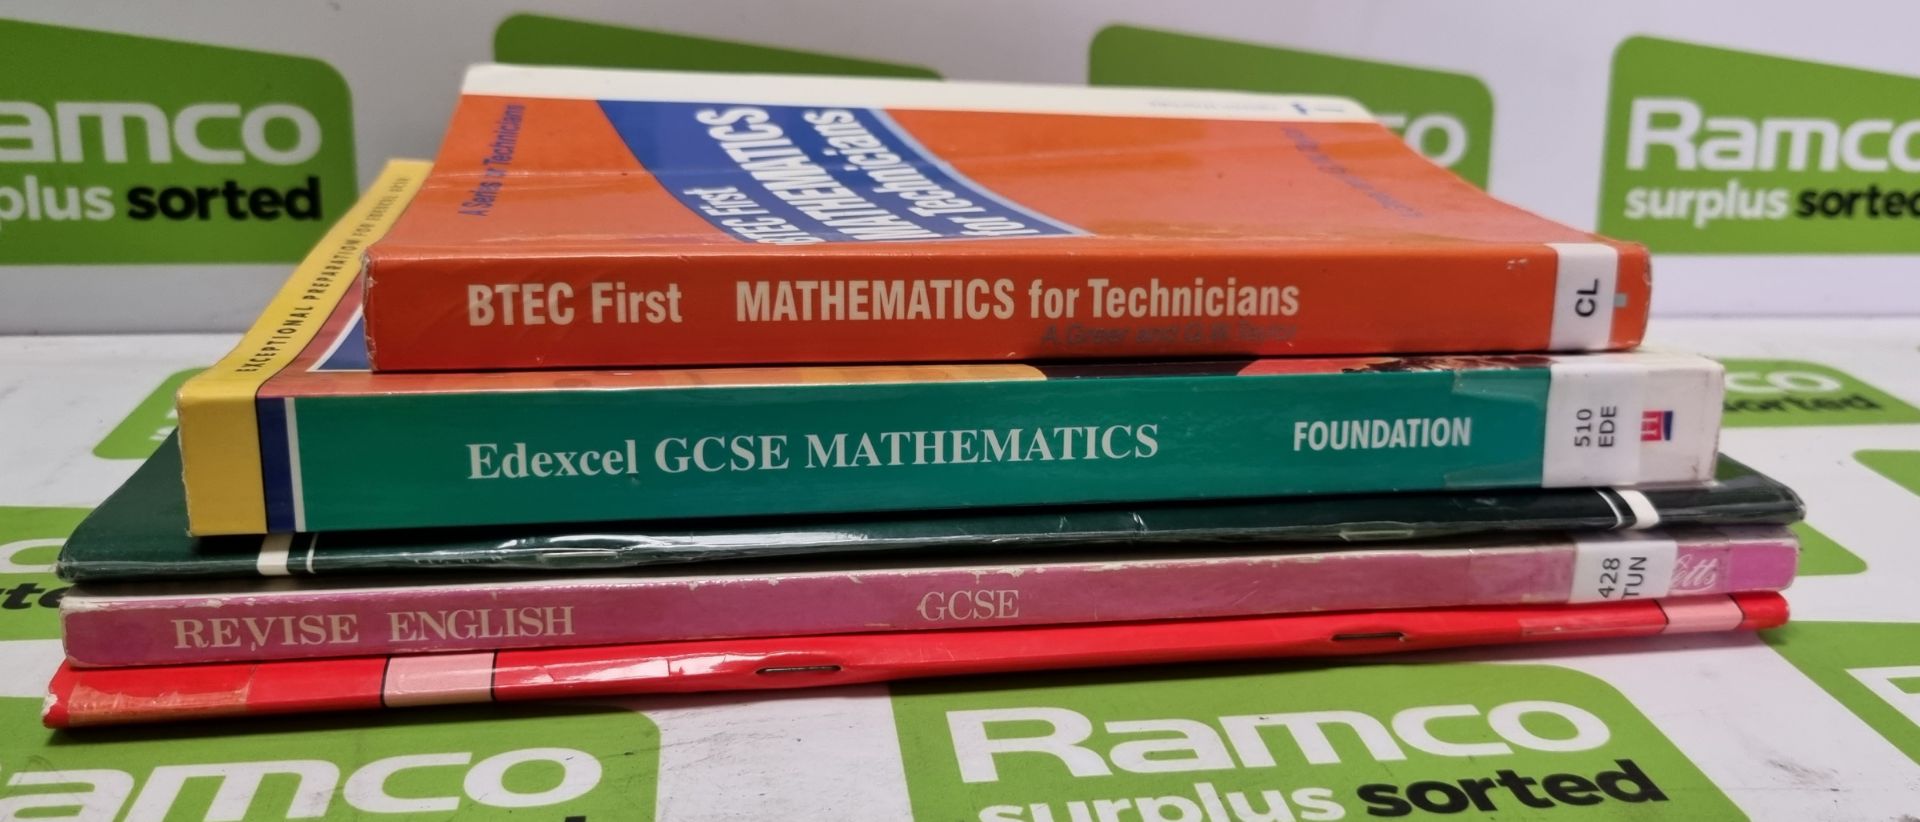 BTEC first Mathematics for Technicians, Edexcel GCSE Mathematics, Revise English GCSE, GCSE Mathemat